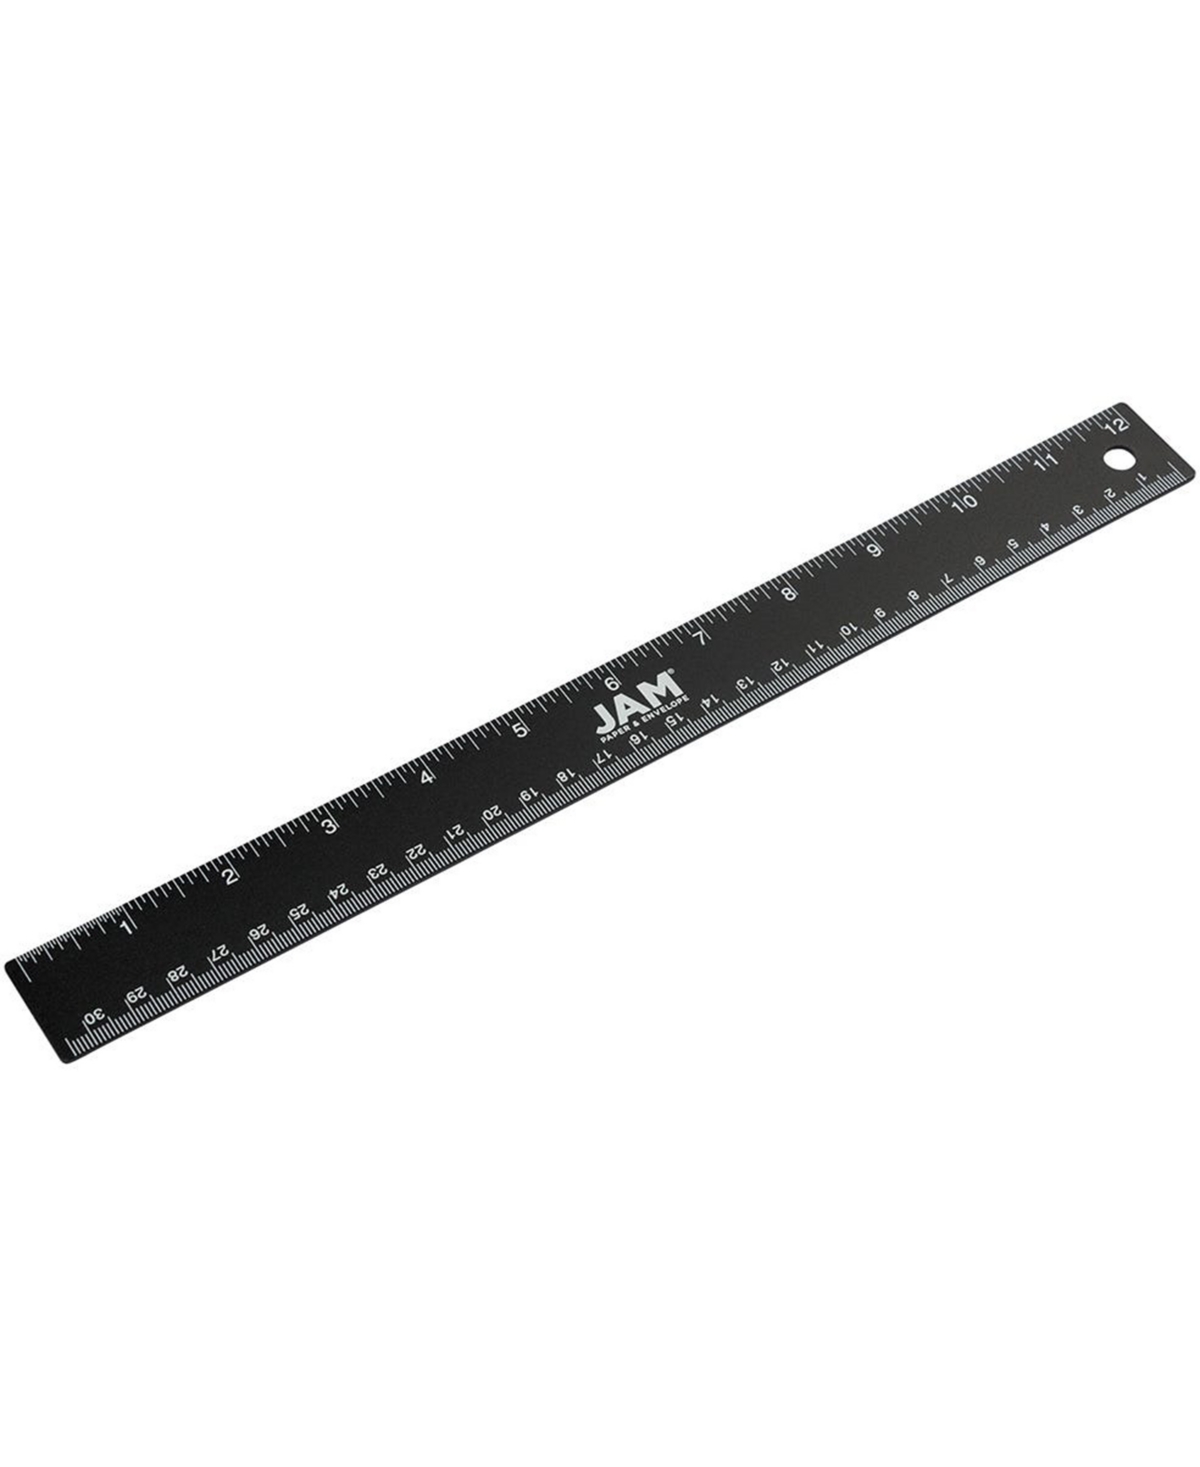 Strong Aluminum Ruler - 12" - Metal Ruler with Non-Skid Cork Backing - Black Metallic